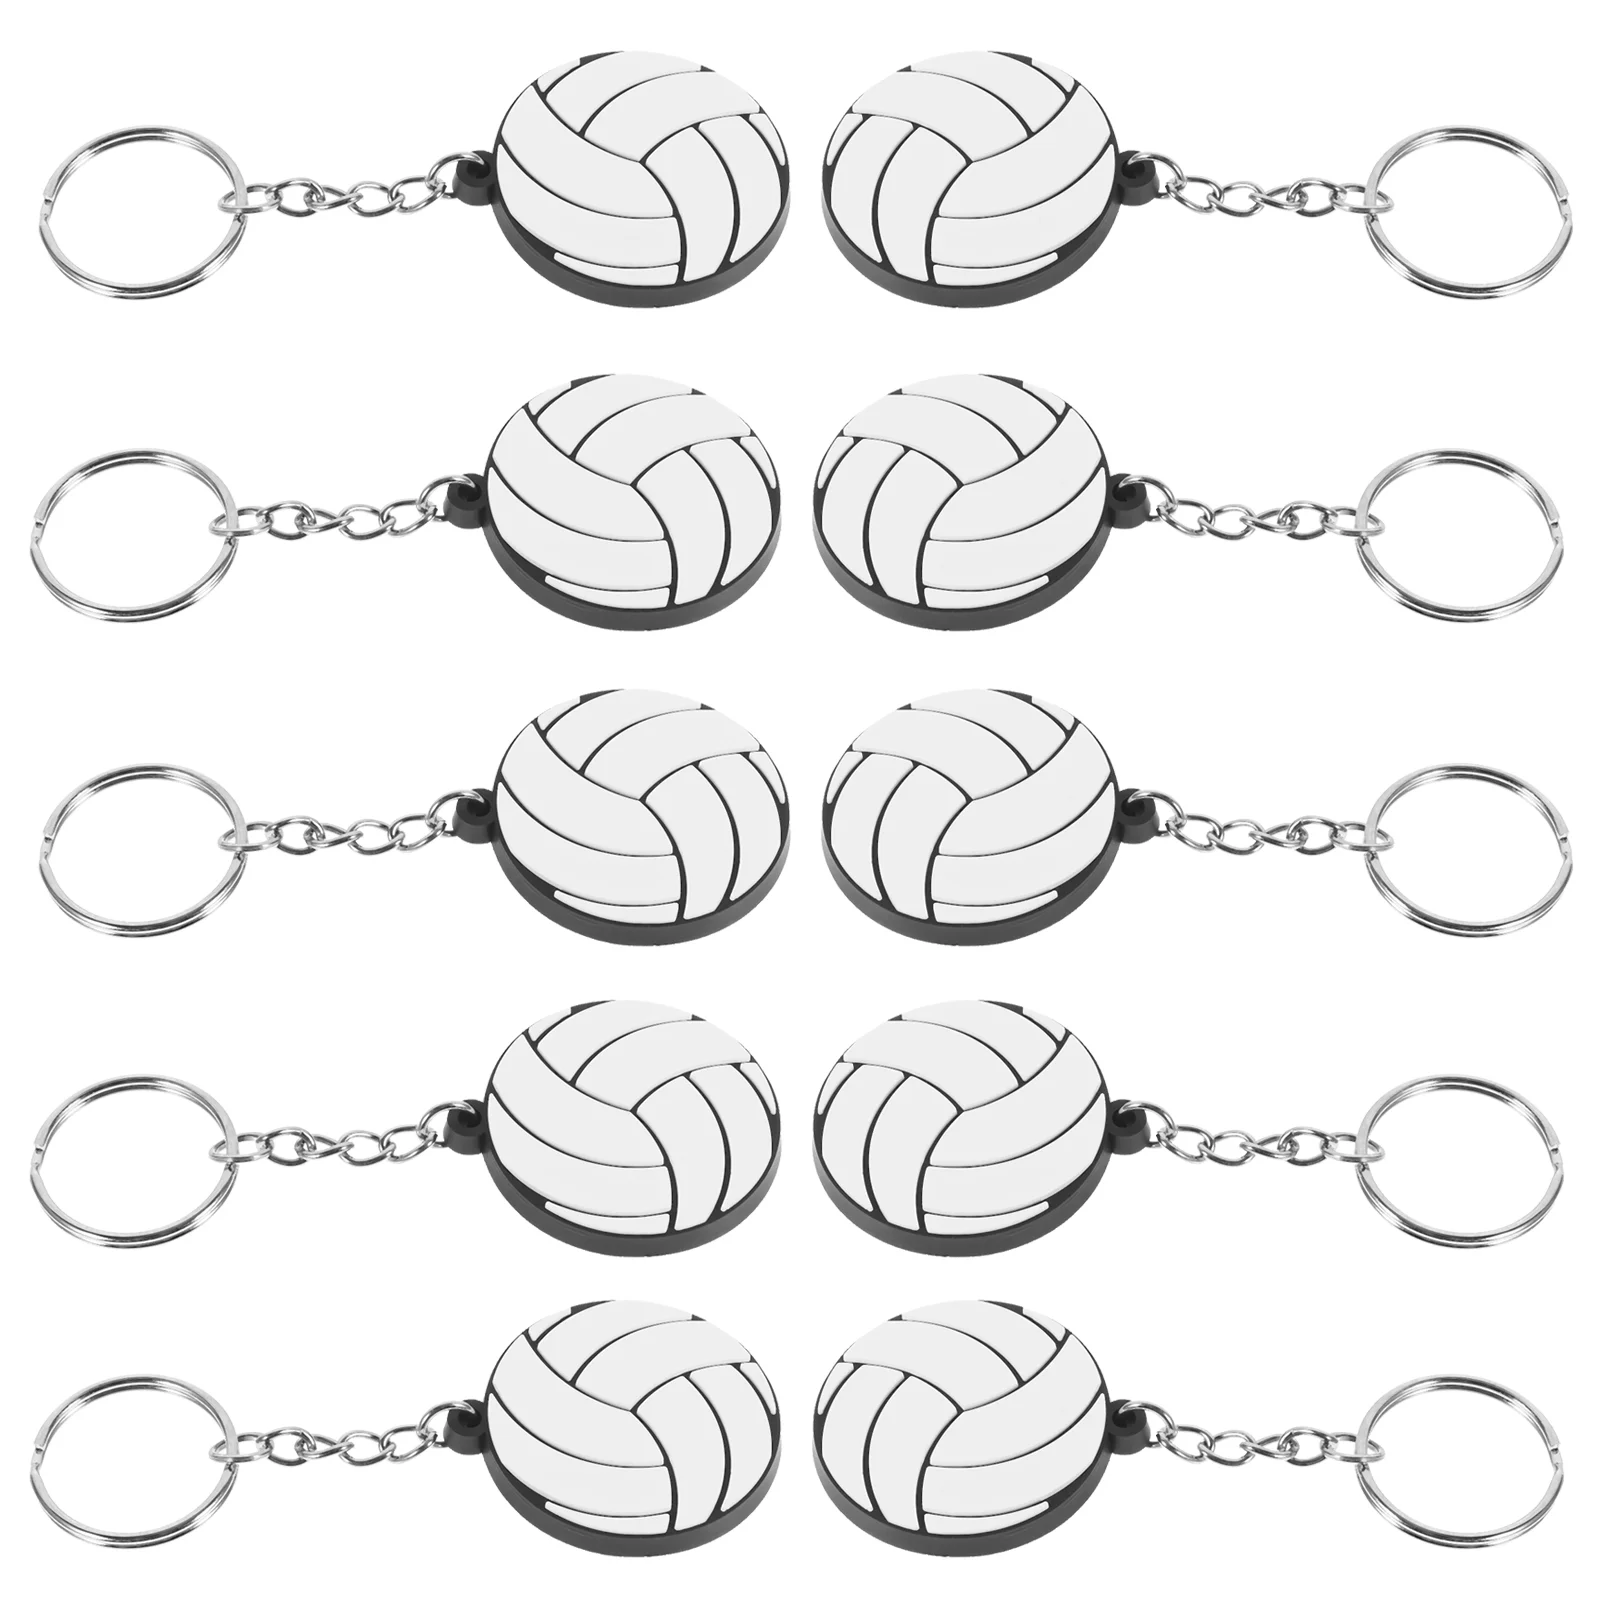 

10 Pcs Memento Key Rings Pendant Chain Mini Keychain Keychains Players Small Sports Child